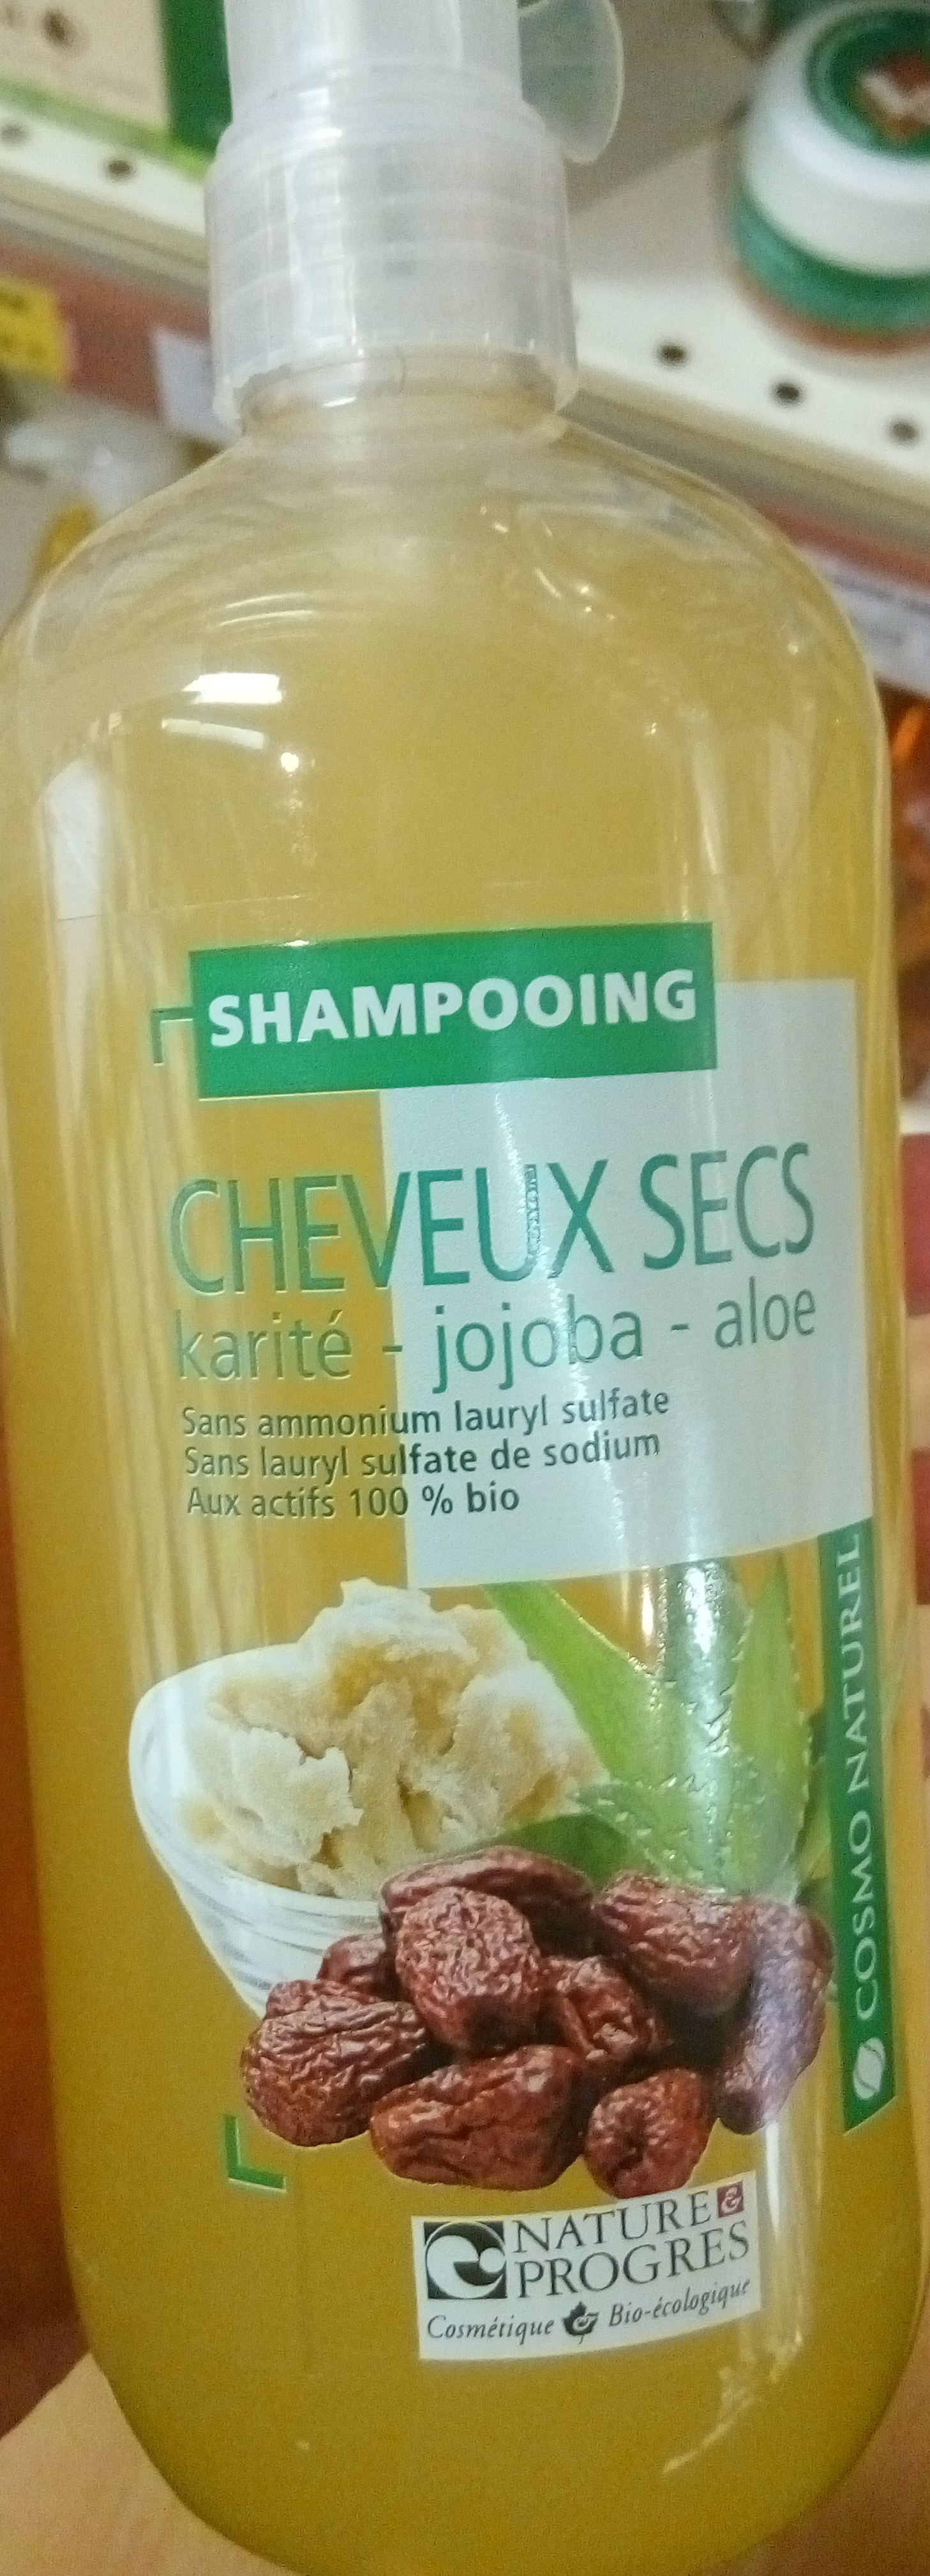 Shampooing Cheveux secs Karité - Jojoba - Aloe - Product - fr